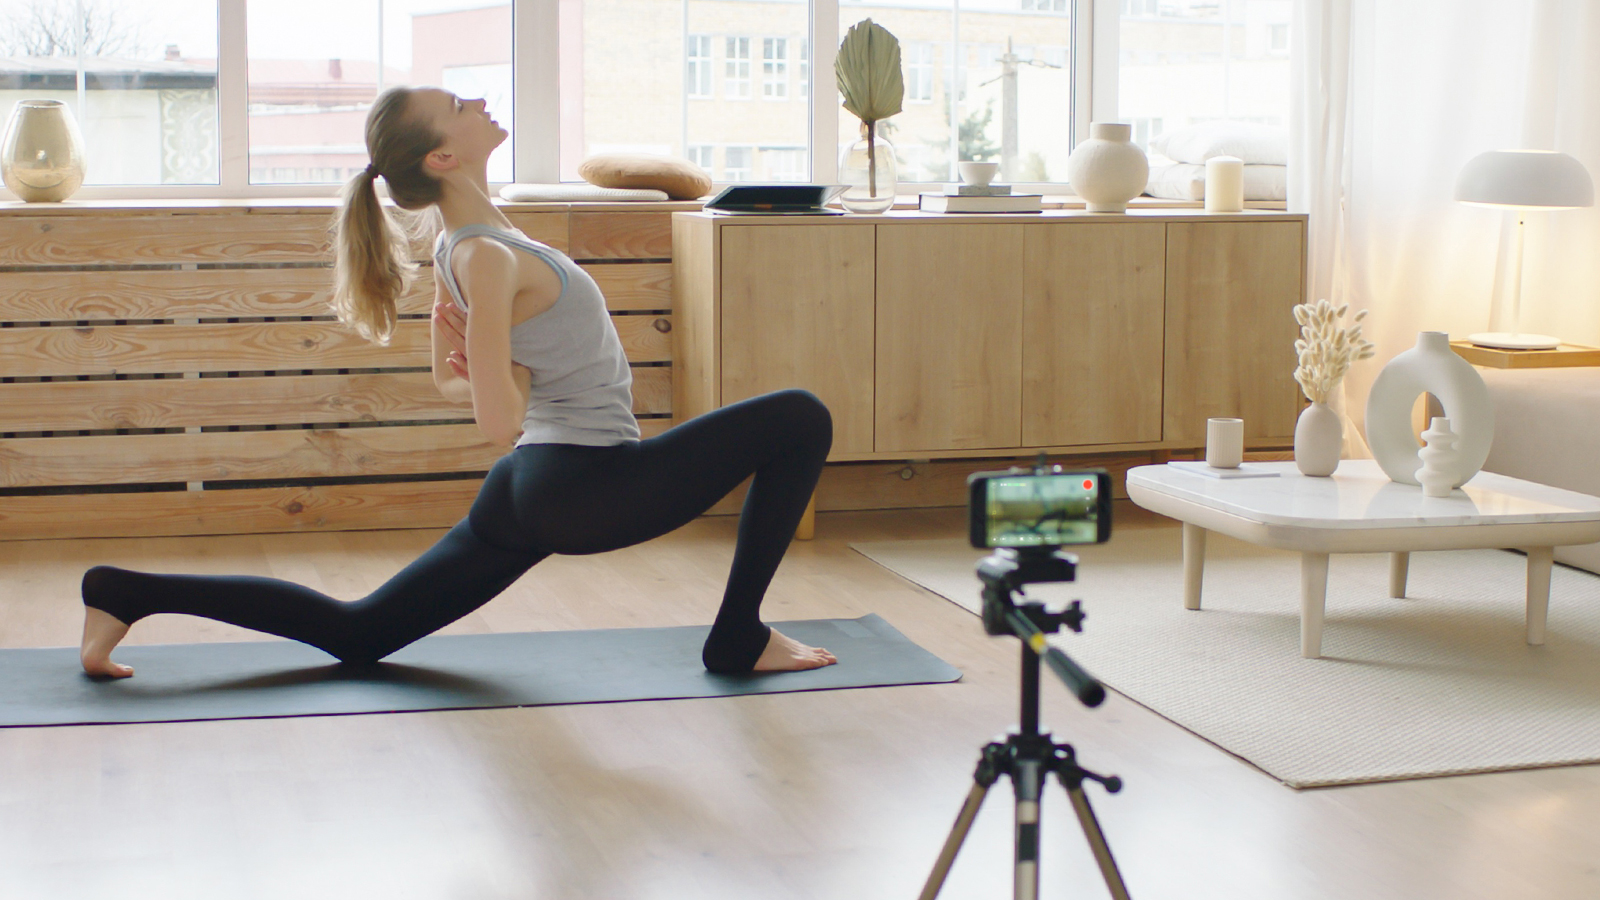 How to Livestream Virtual Fitness Classes